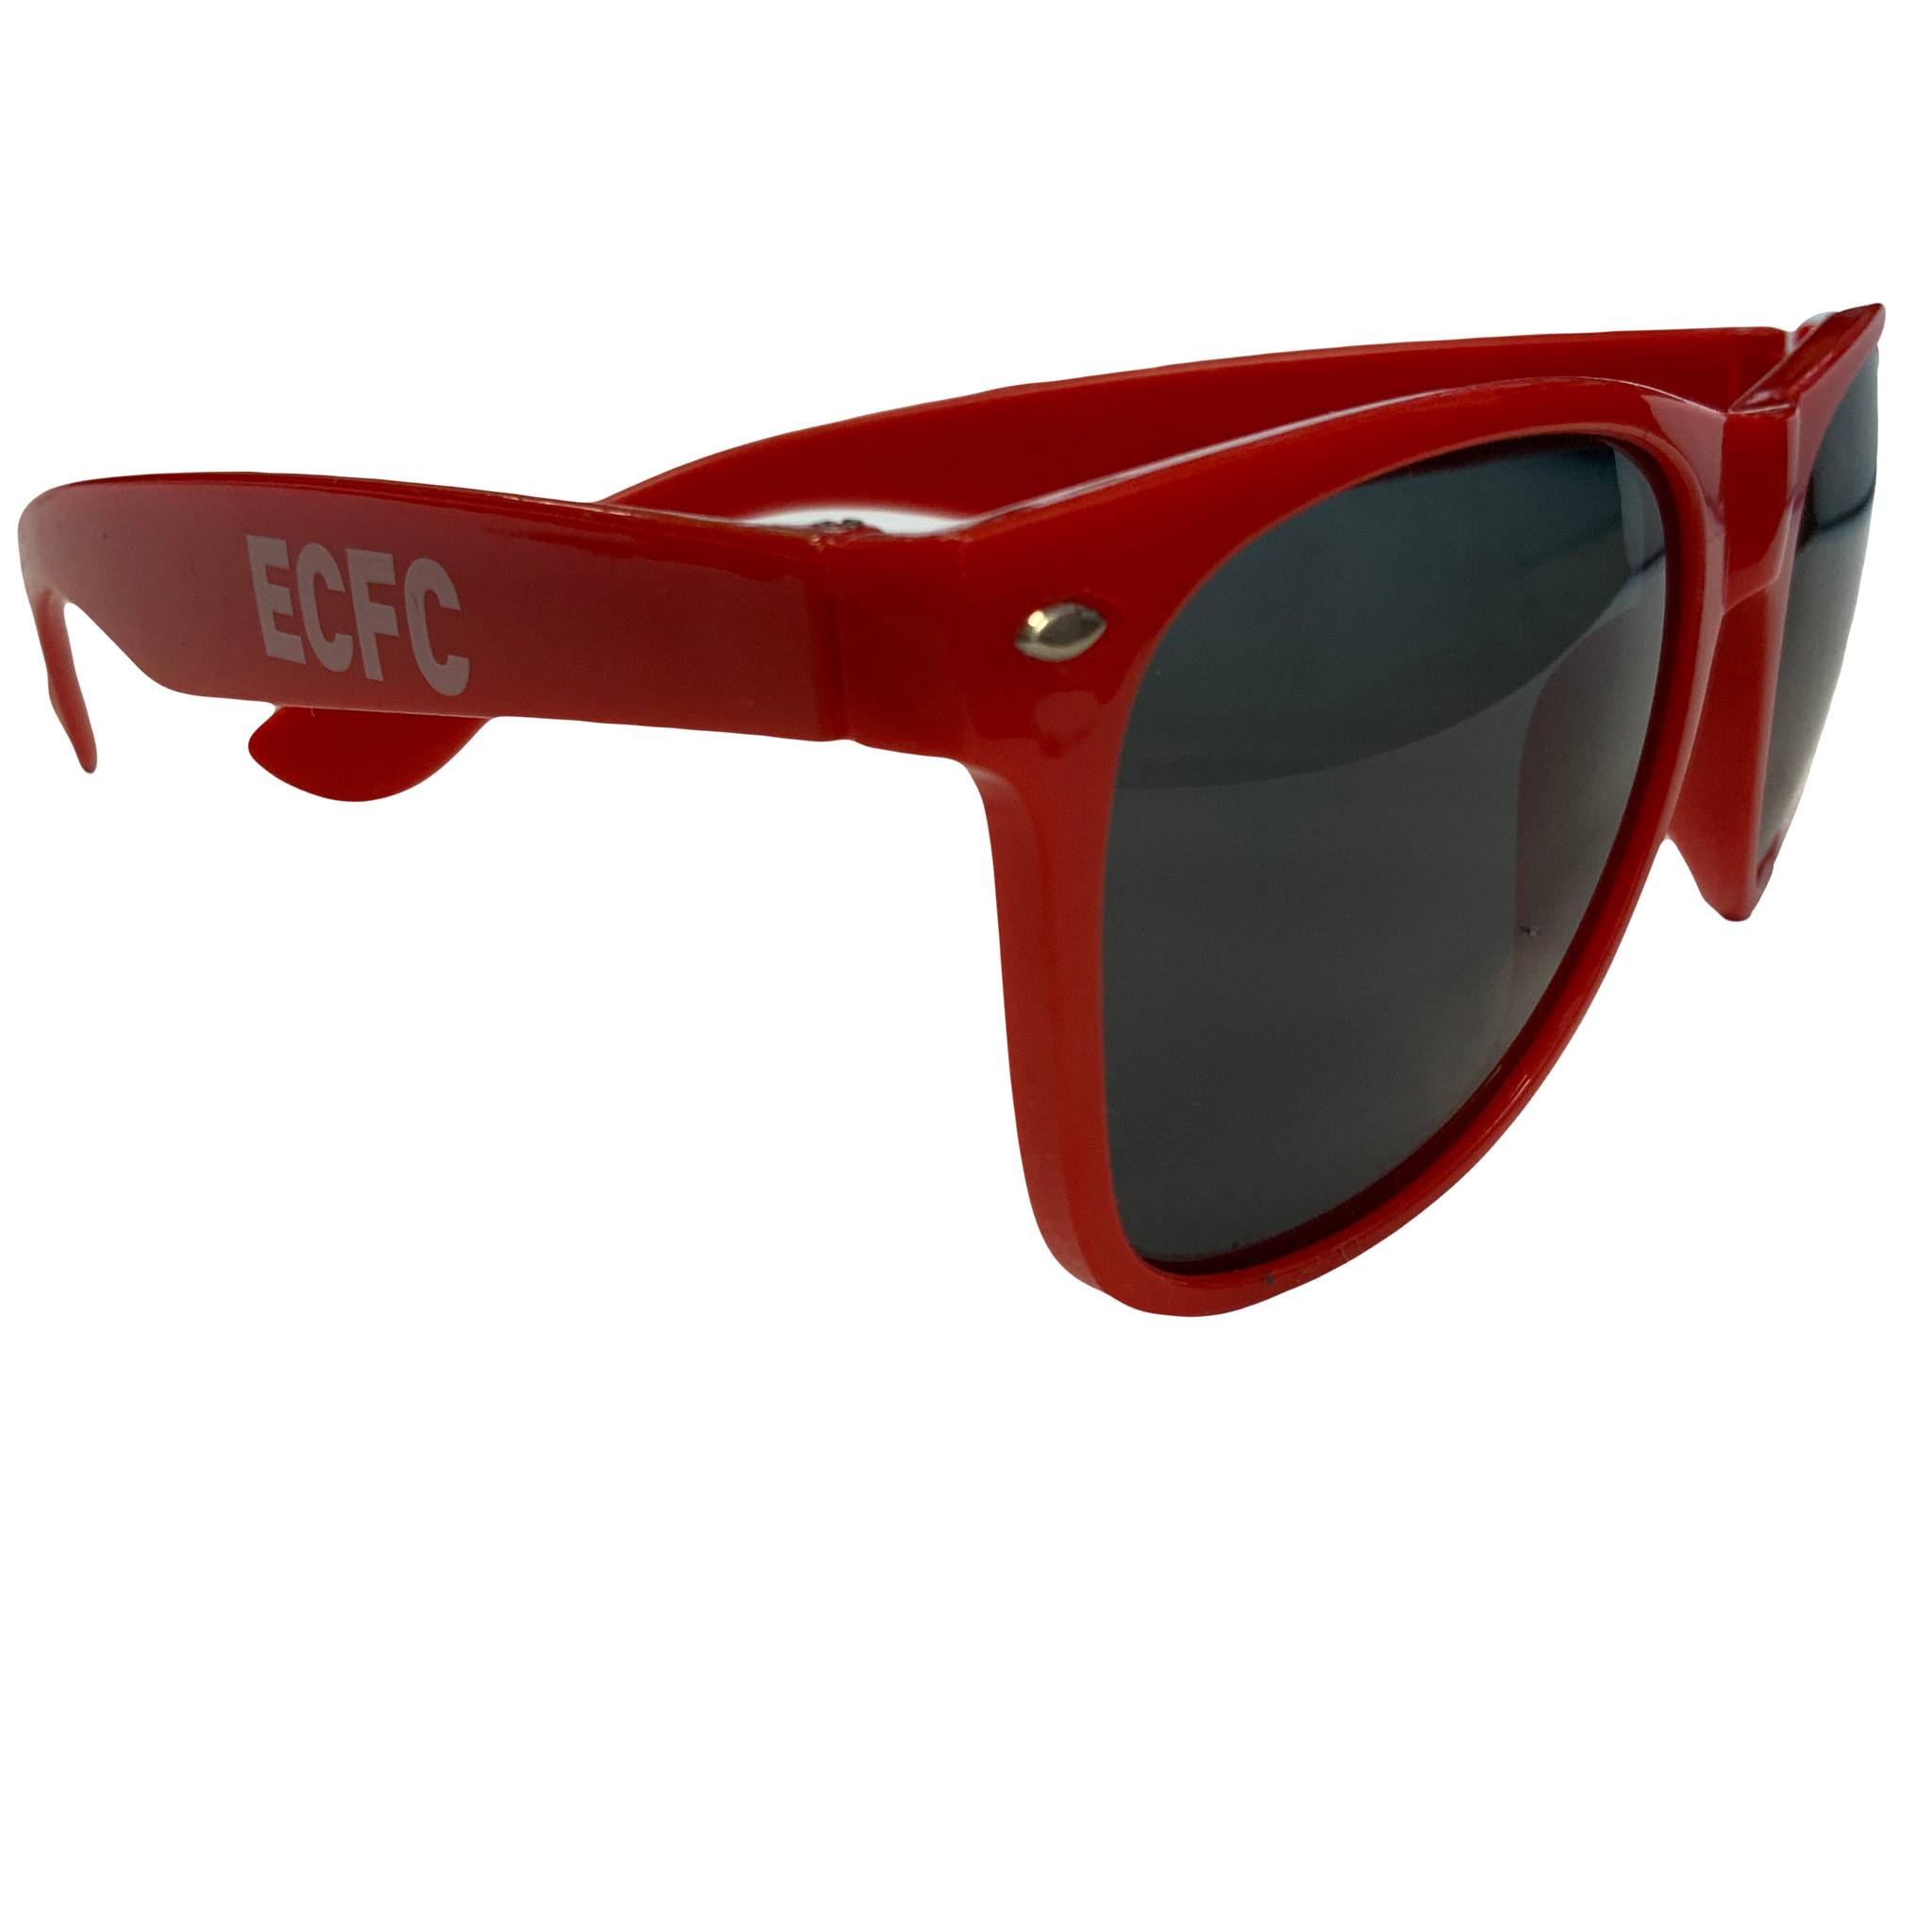 ECFC Sunglasses